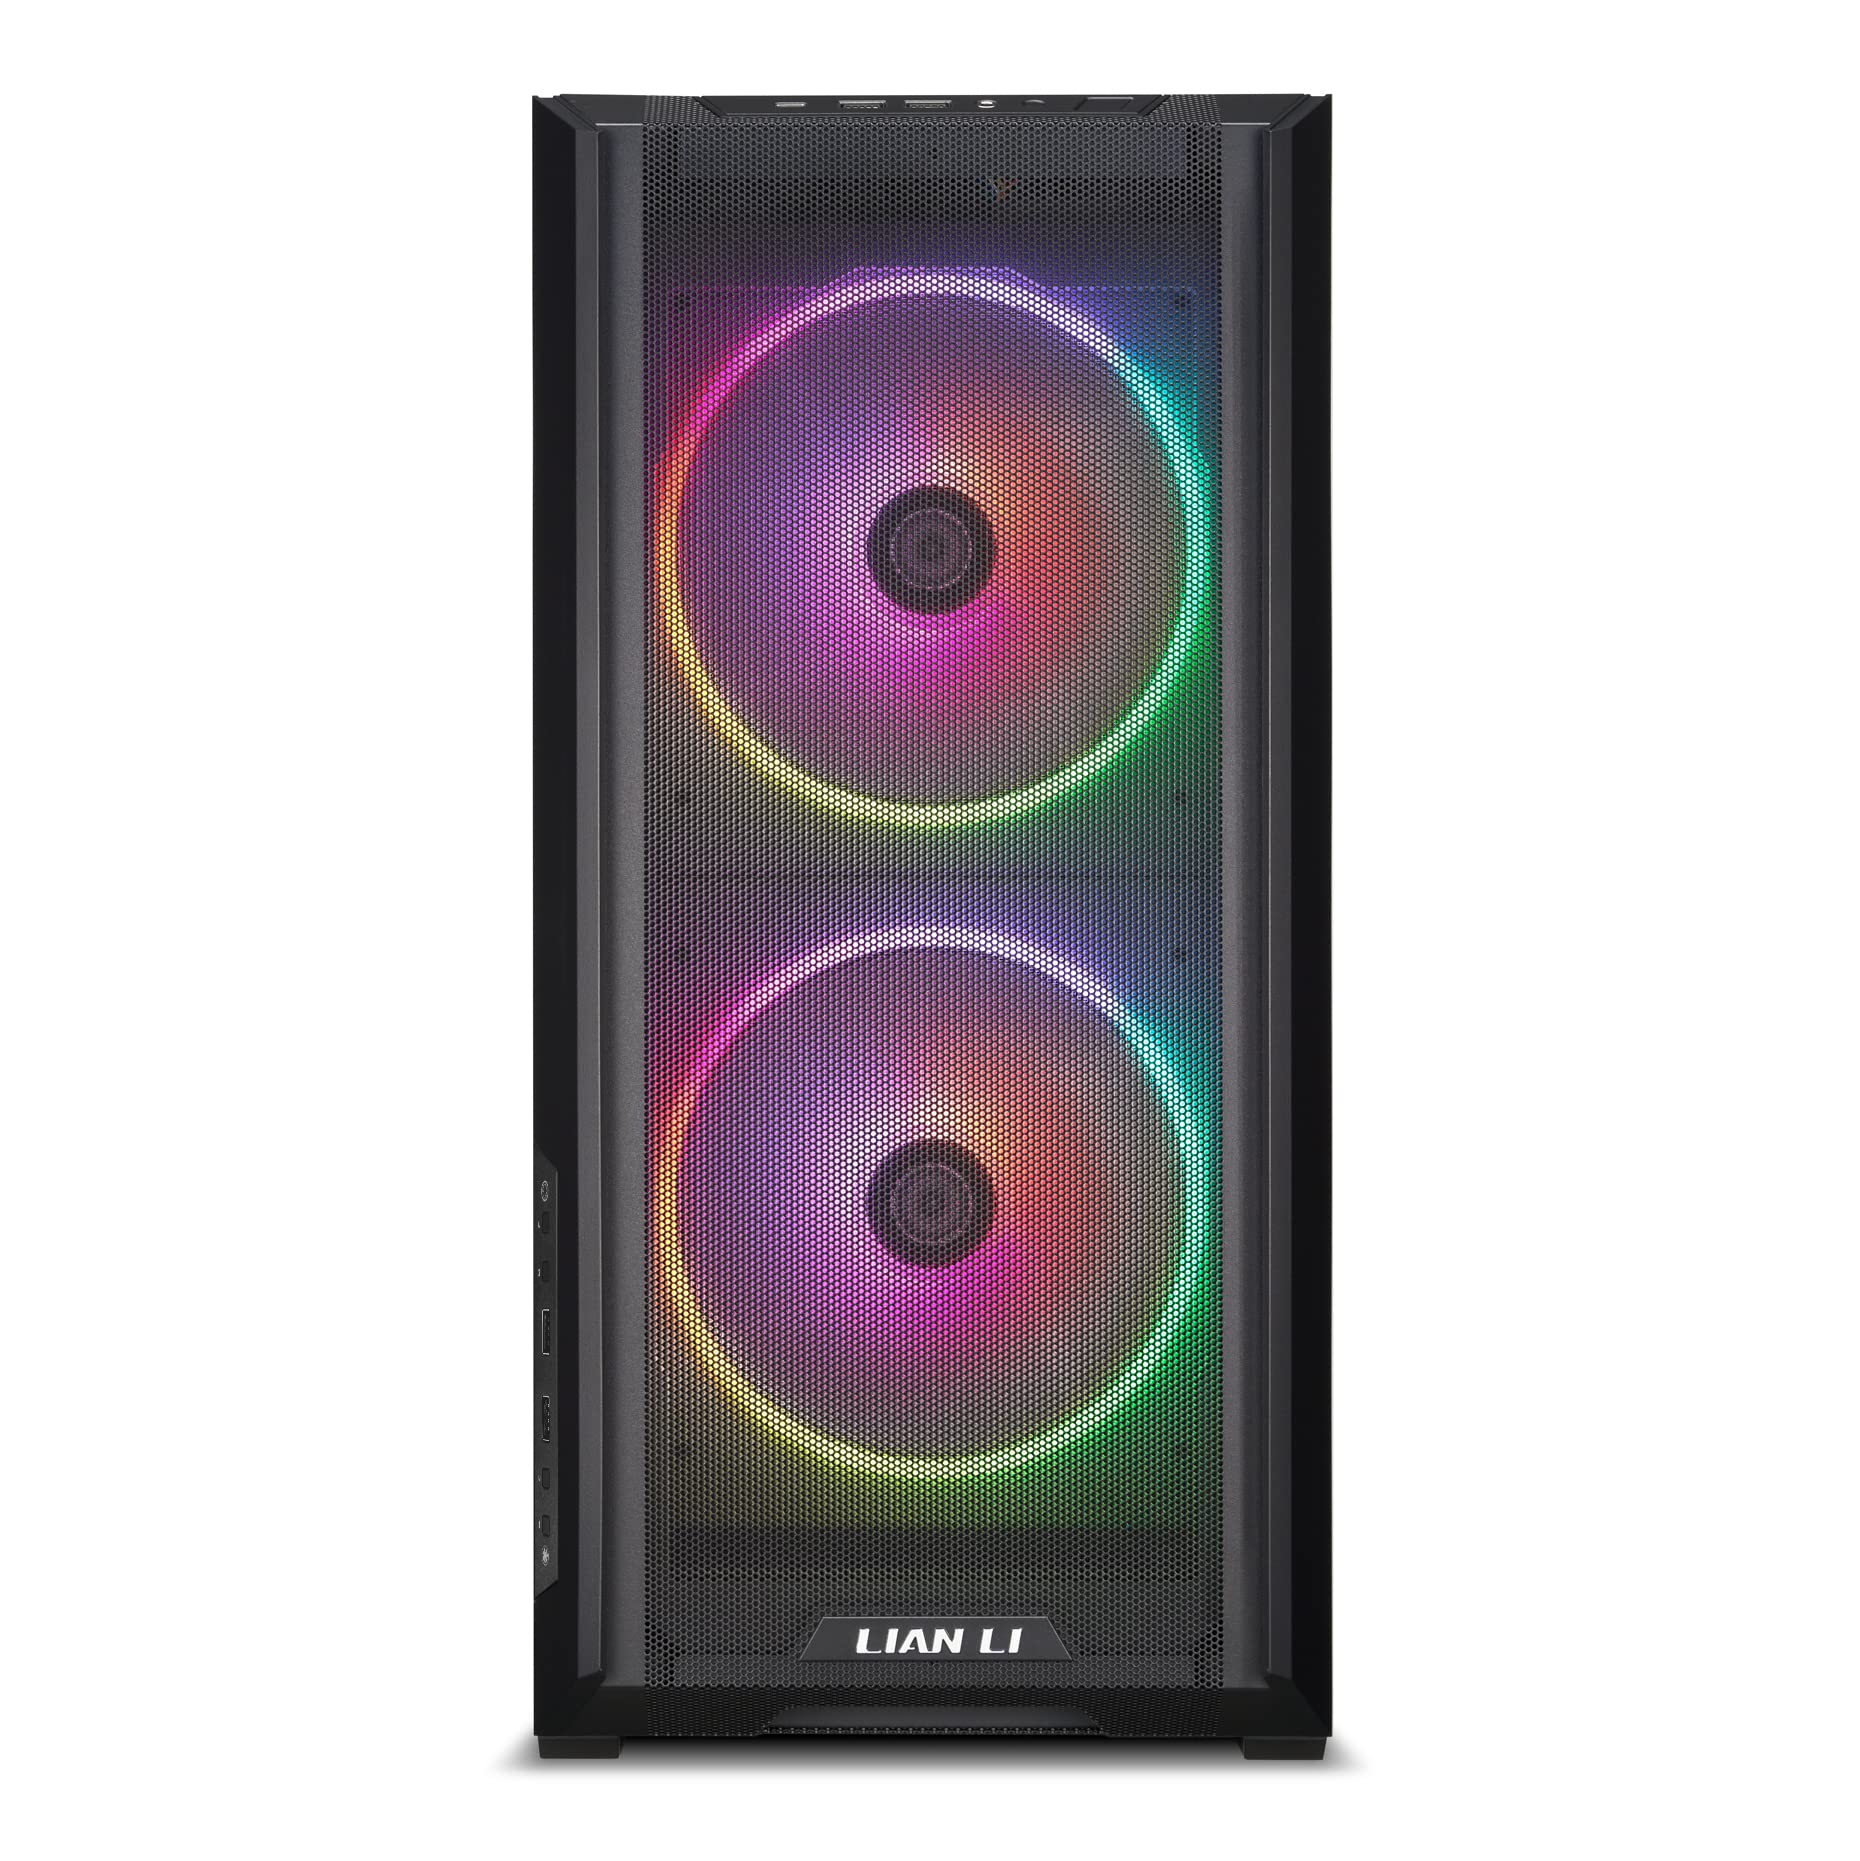 Lian Li Lancool 216 RGB Black Steel (with Fan Controller)/Tempered Glass ATX Mid Tower Computer Case,2X 160 mm ARGB Fans Included -LANCOOL 216RC-X